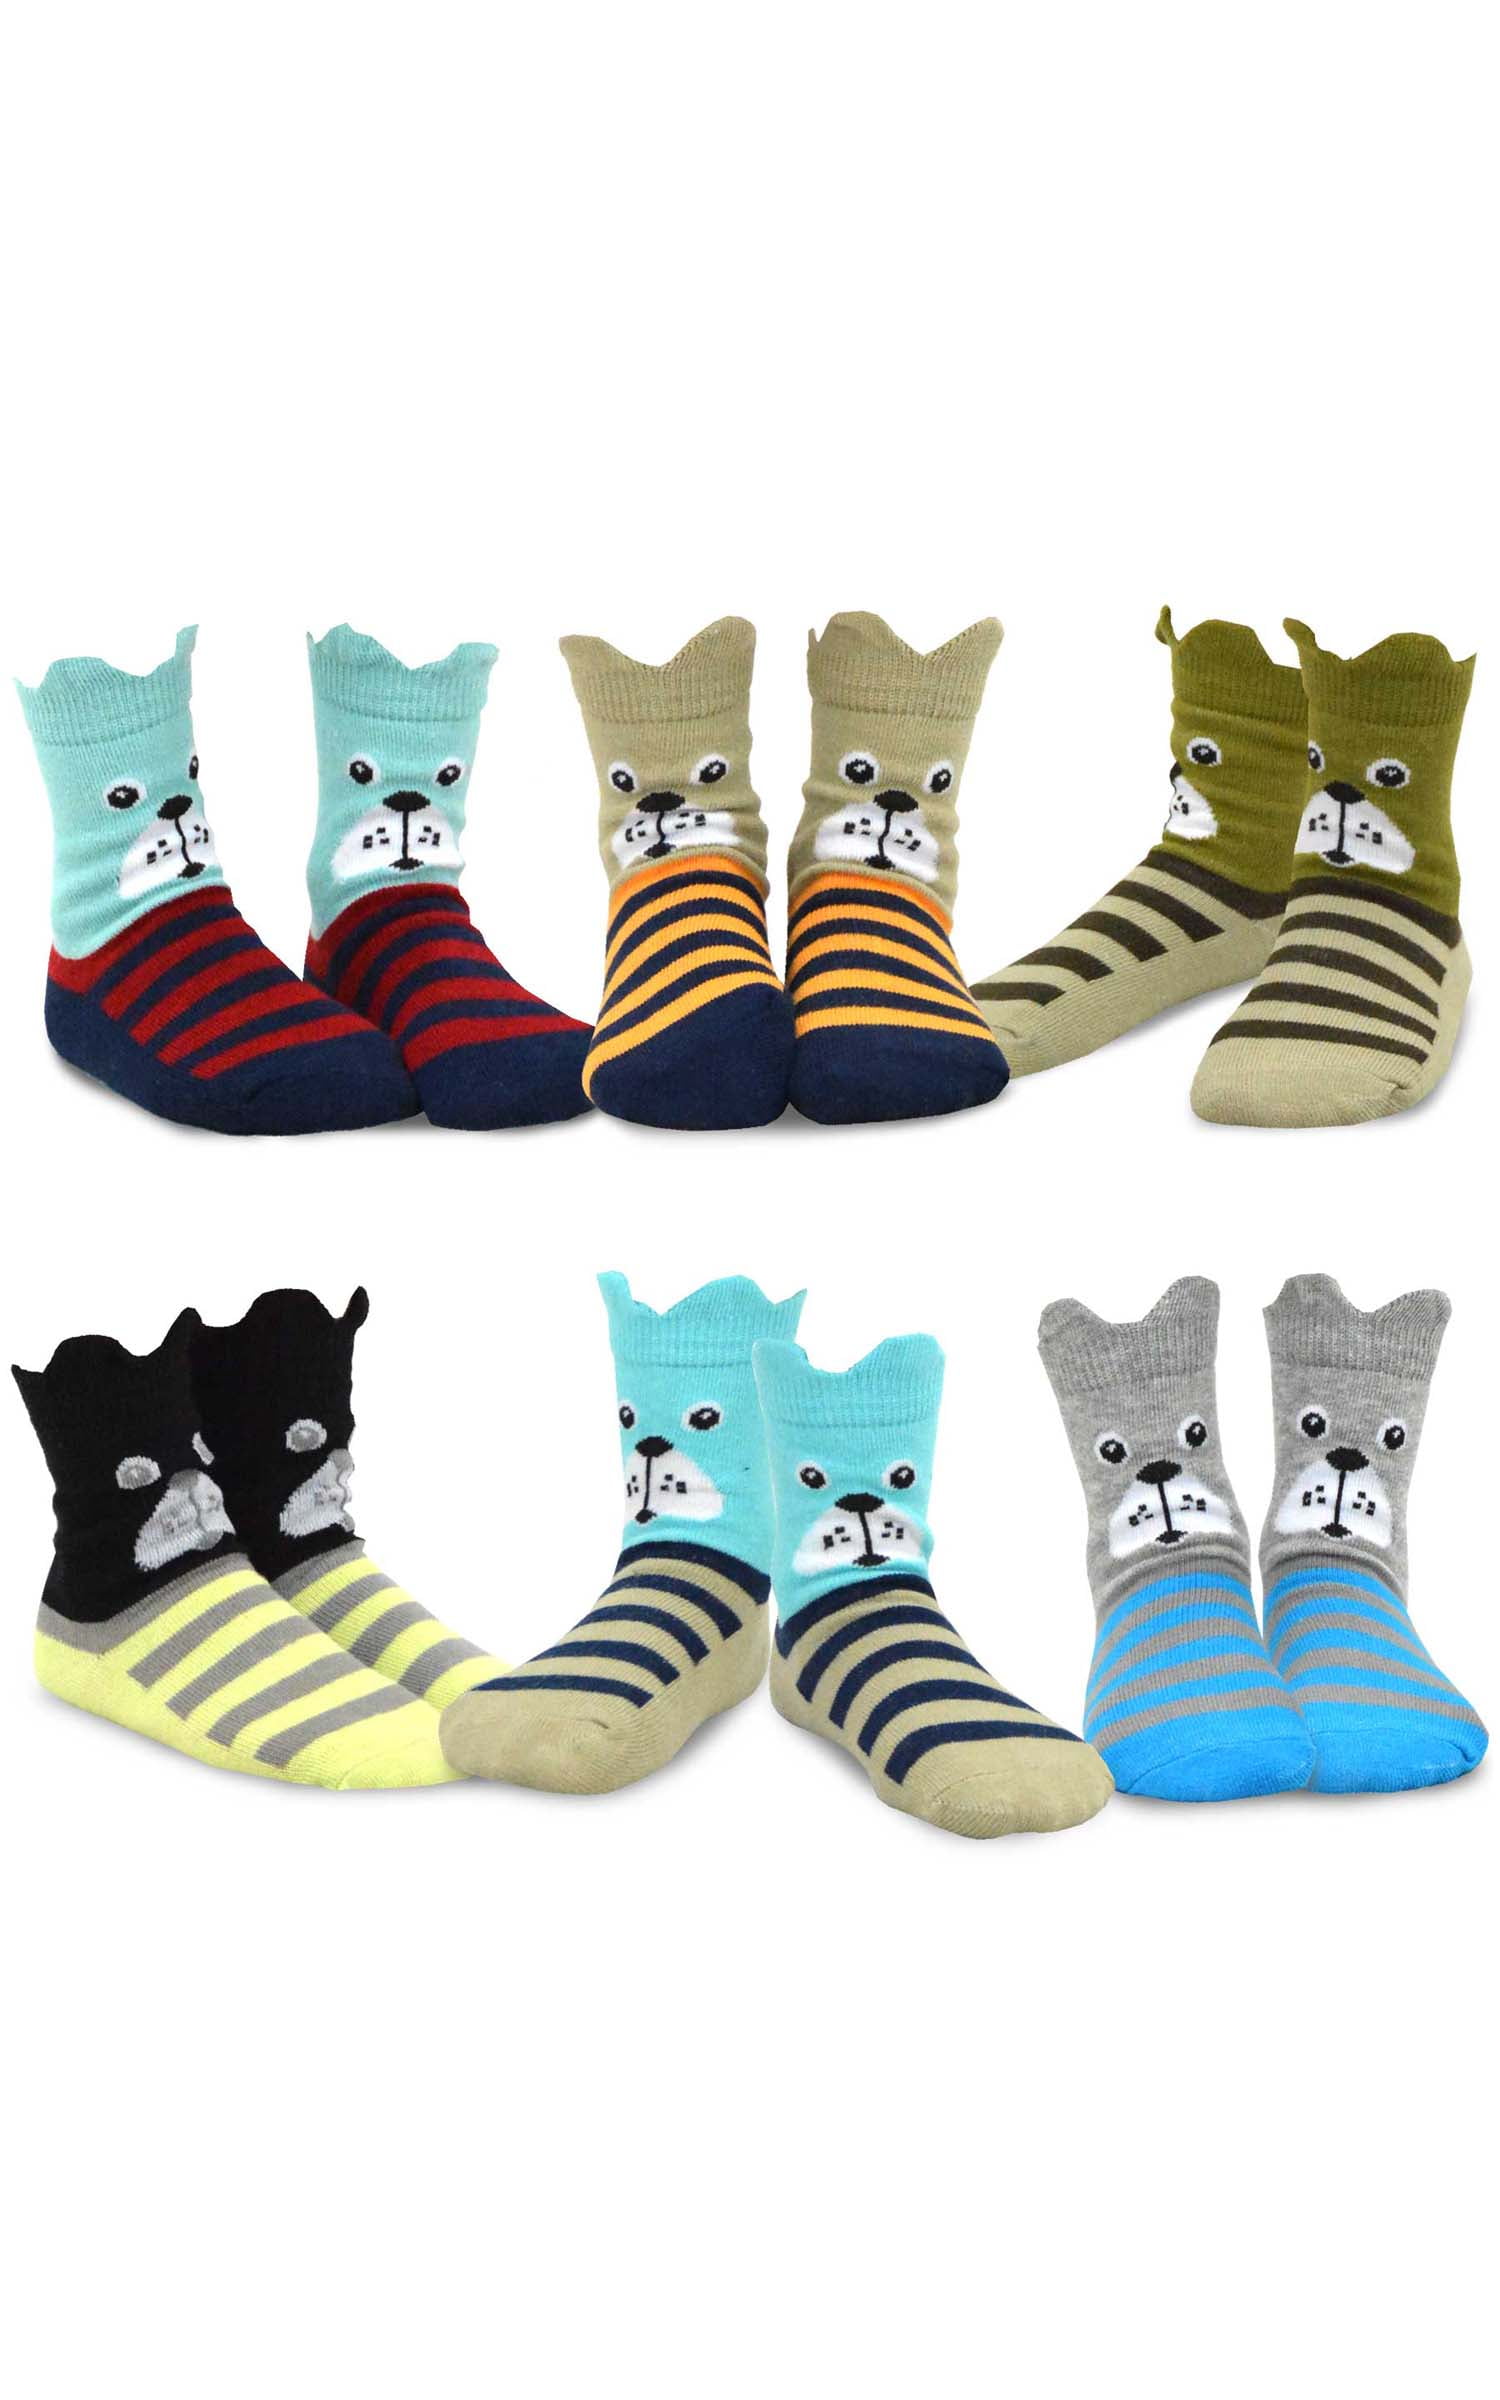 6 Pairs Boys Cotton Rich Design Socks Novelty Cartoon Print Mid Calf Sock UK 6-8.5 Up to 12.5-3.5